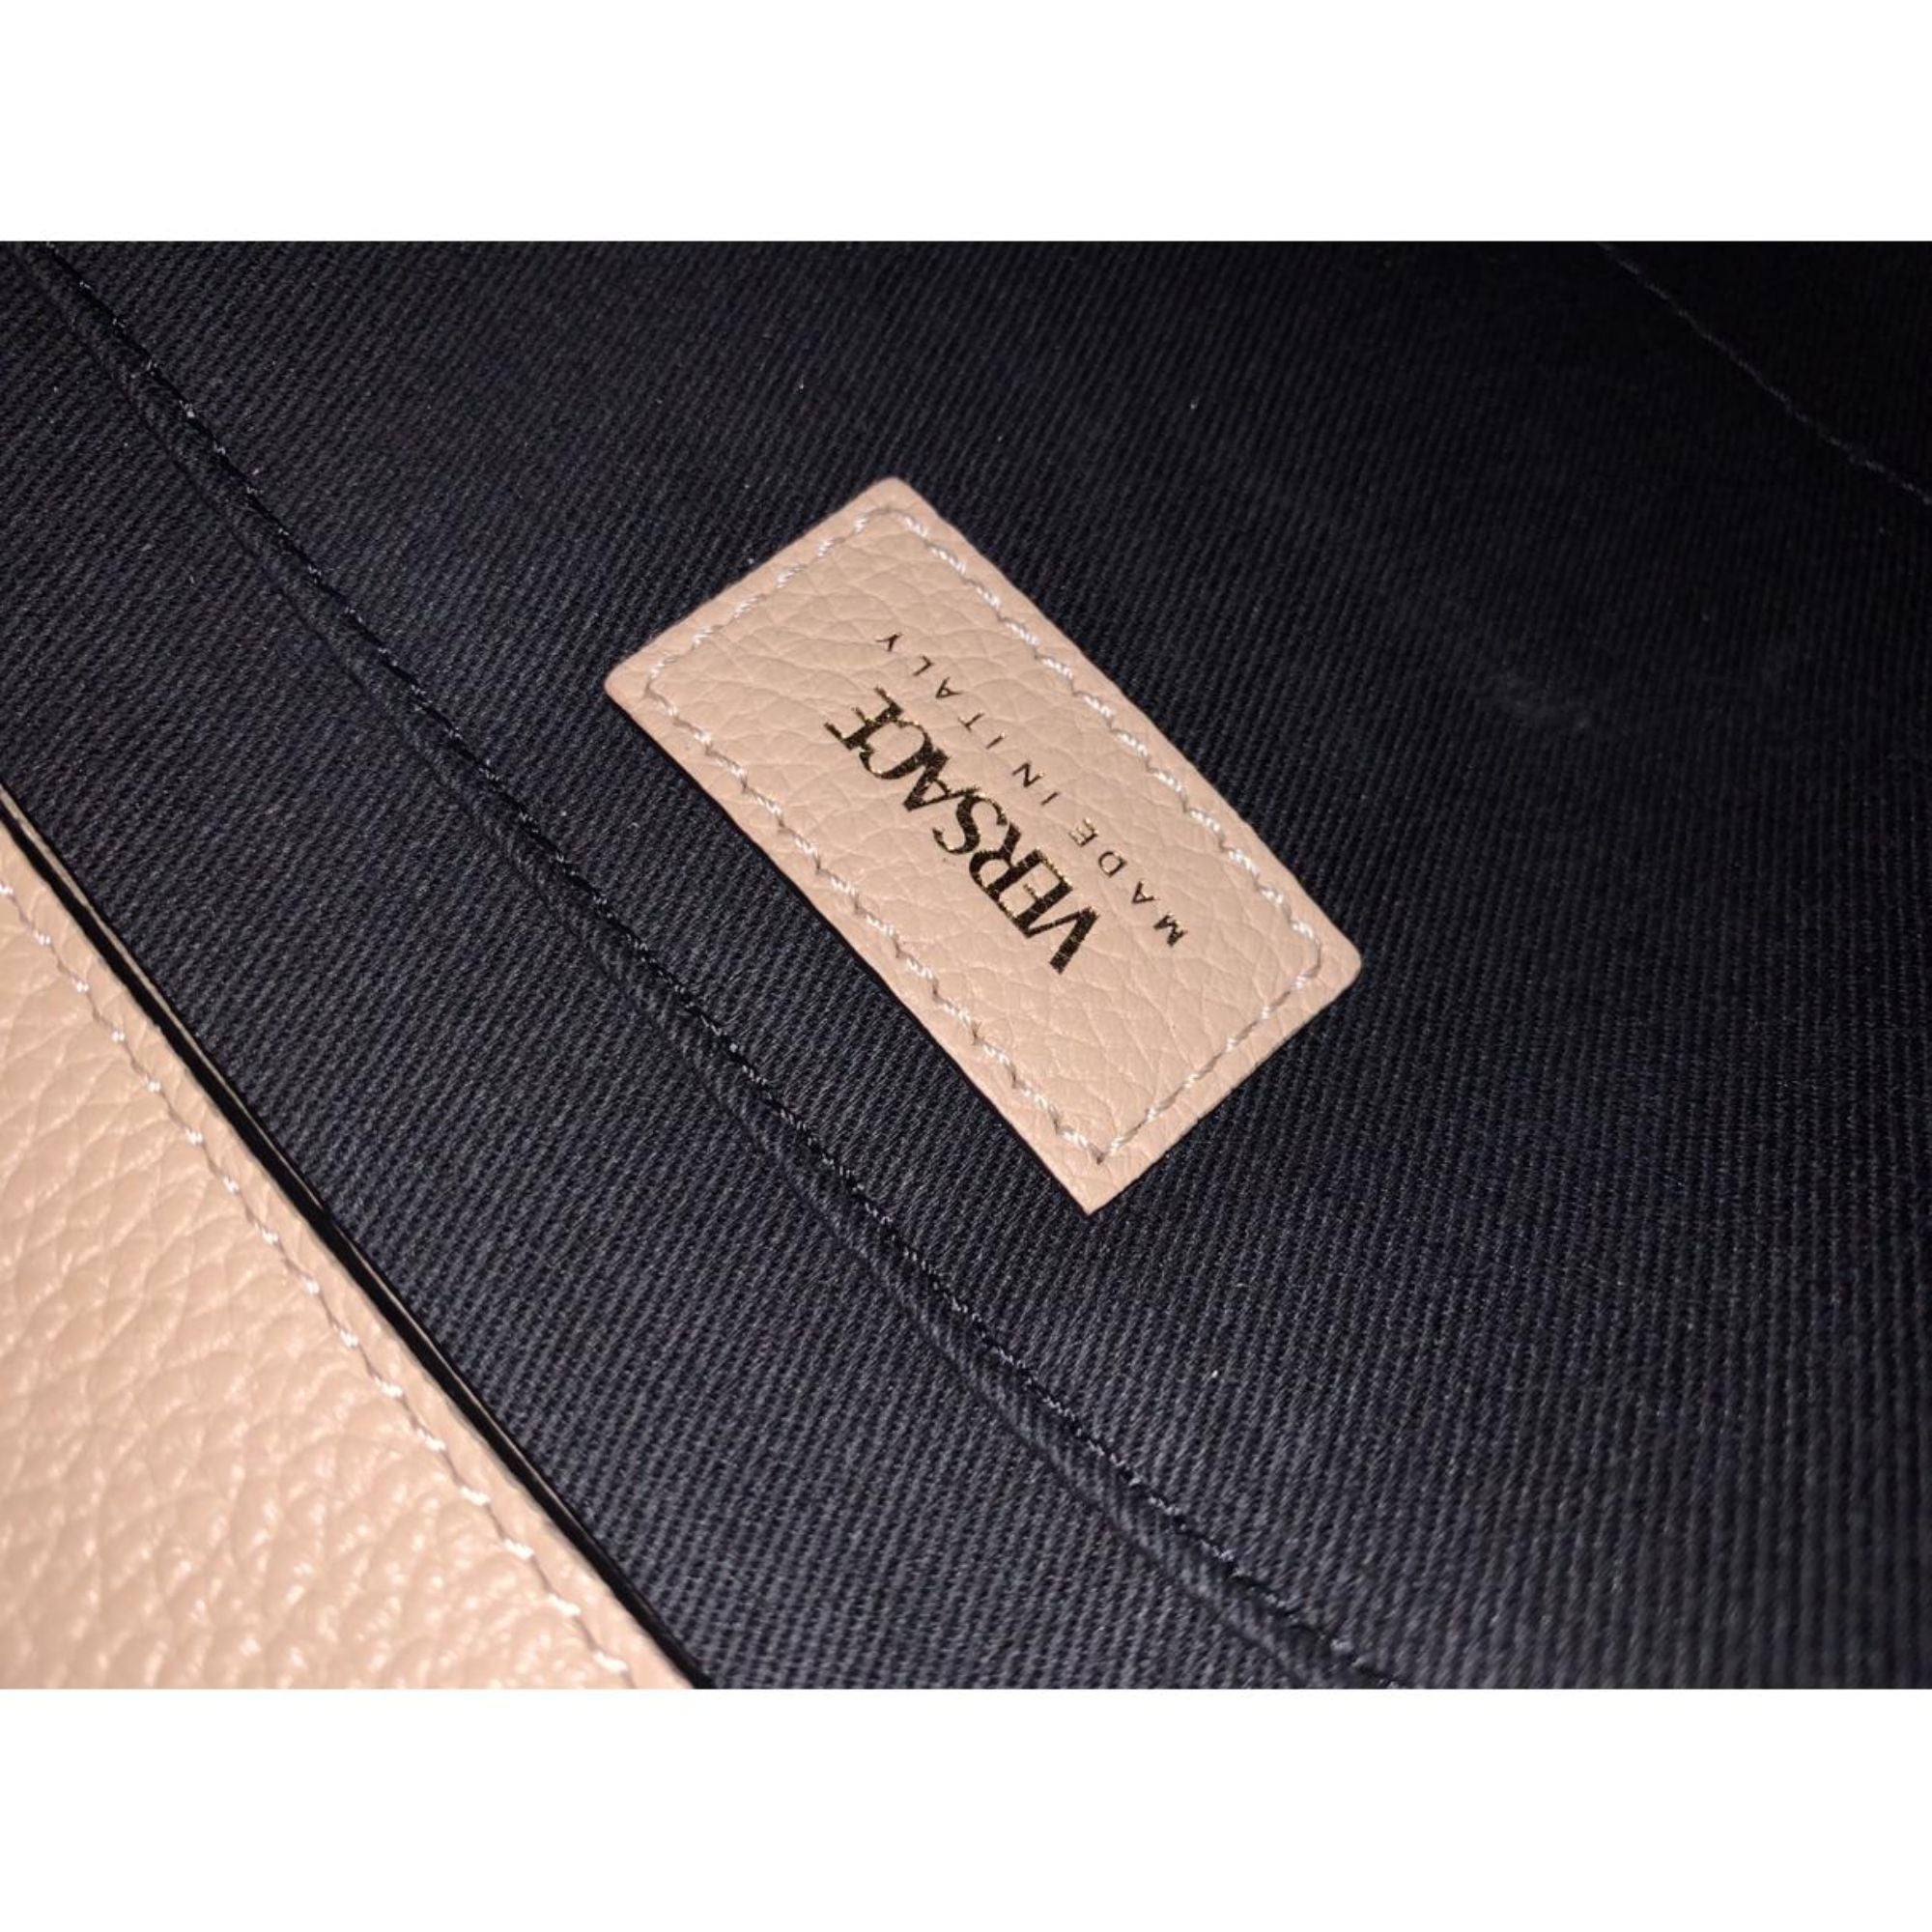 Versace Virtus Beige Calf Leather Top Handle Crossbody Bag